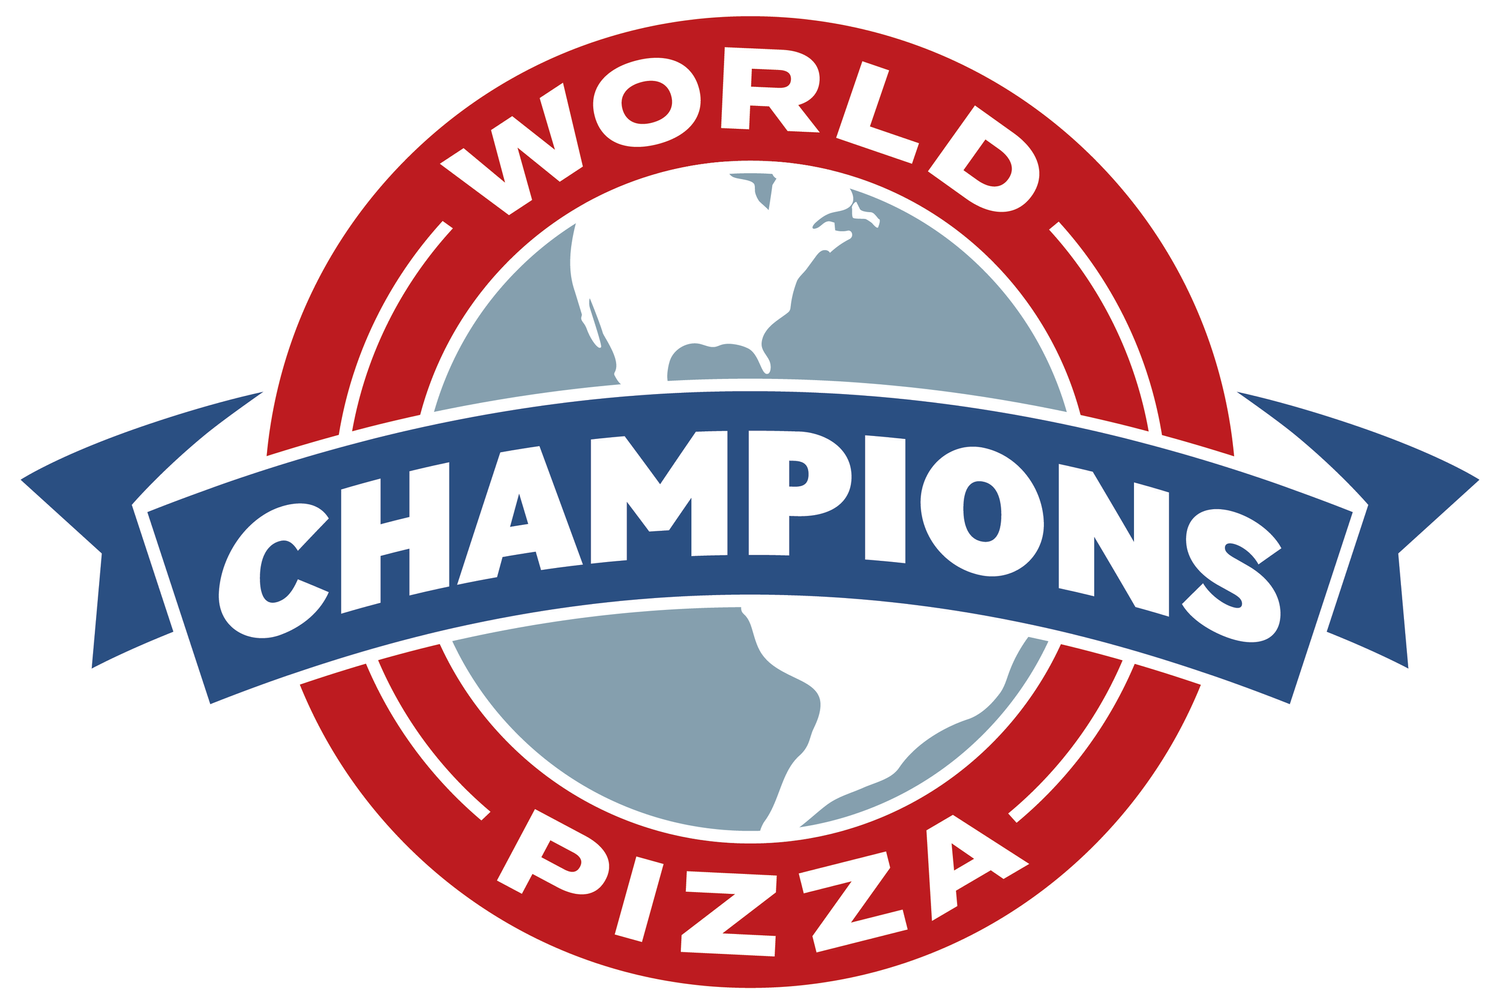 World Pizza Champions